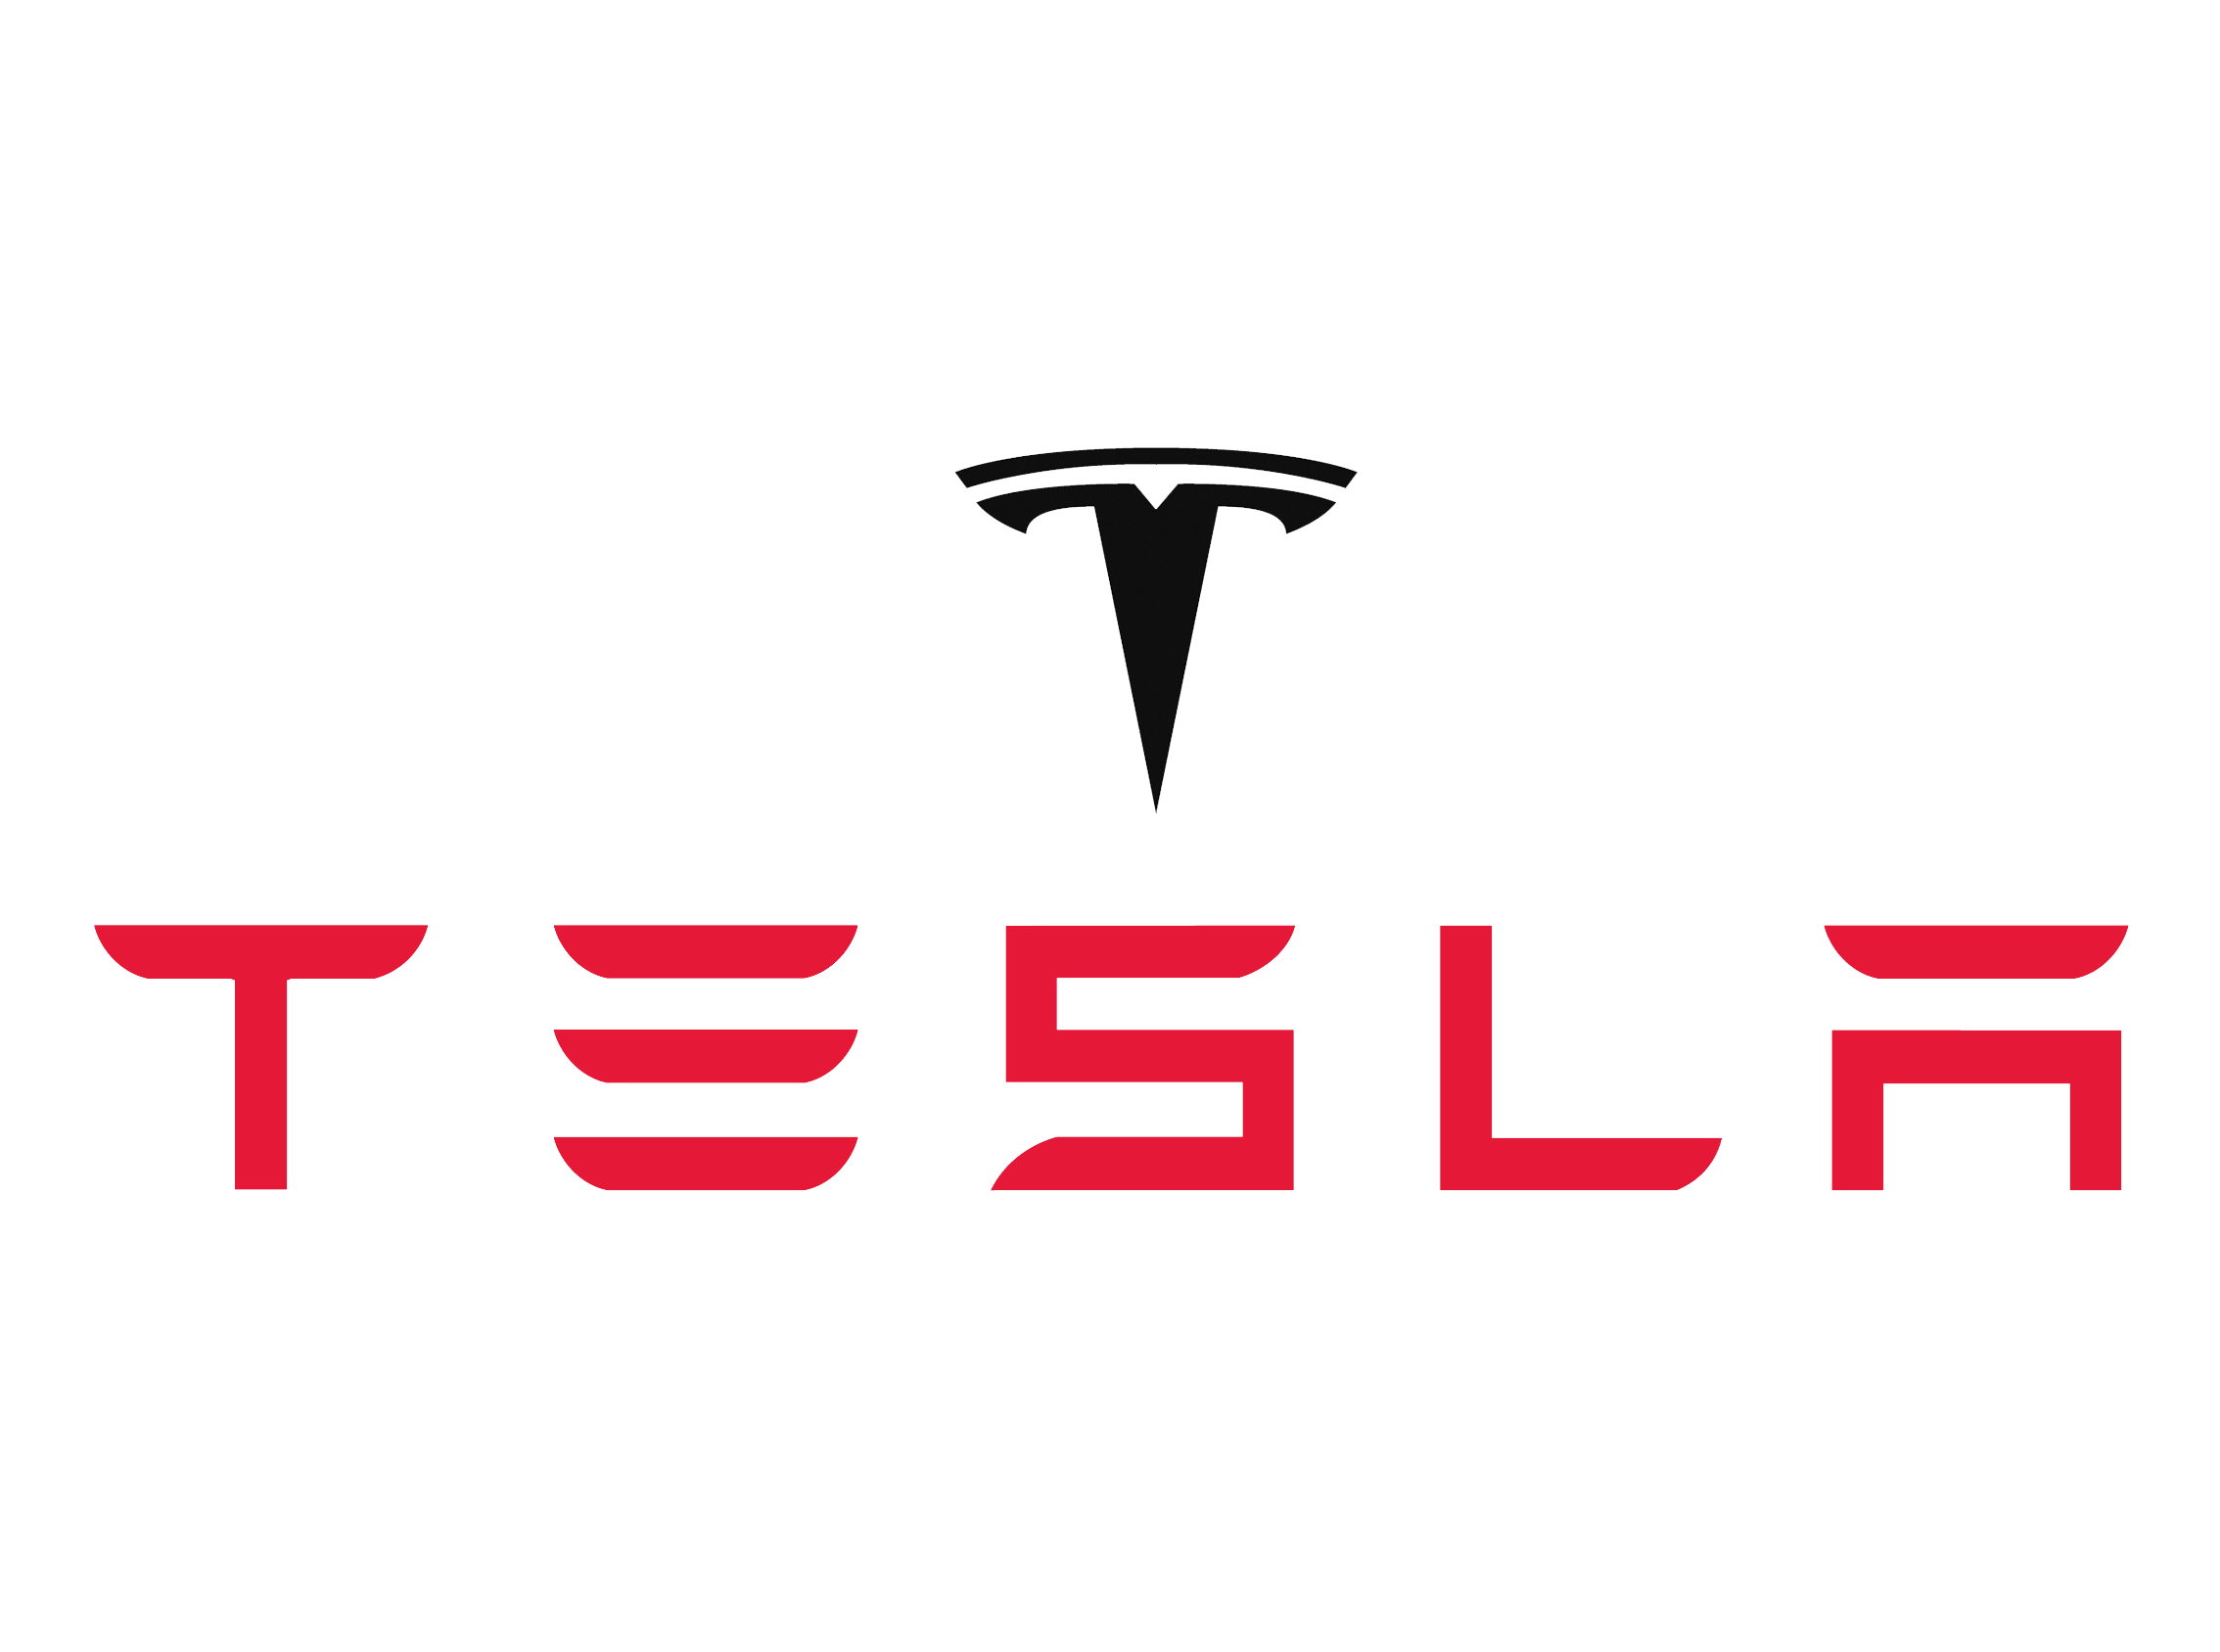 Tesla Logo - Tesla Logo, Tesla Car Symbol Meaning and History | Car Brand Names.com